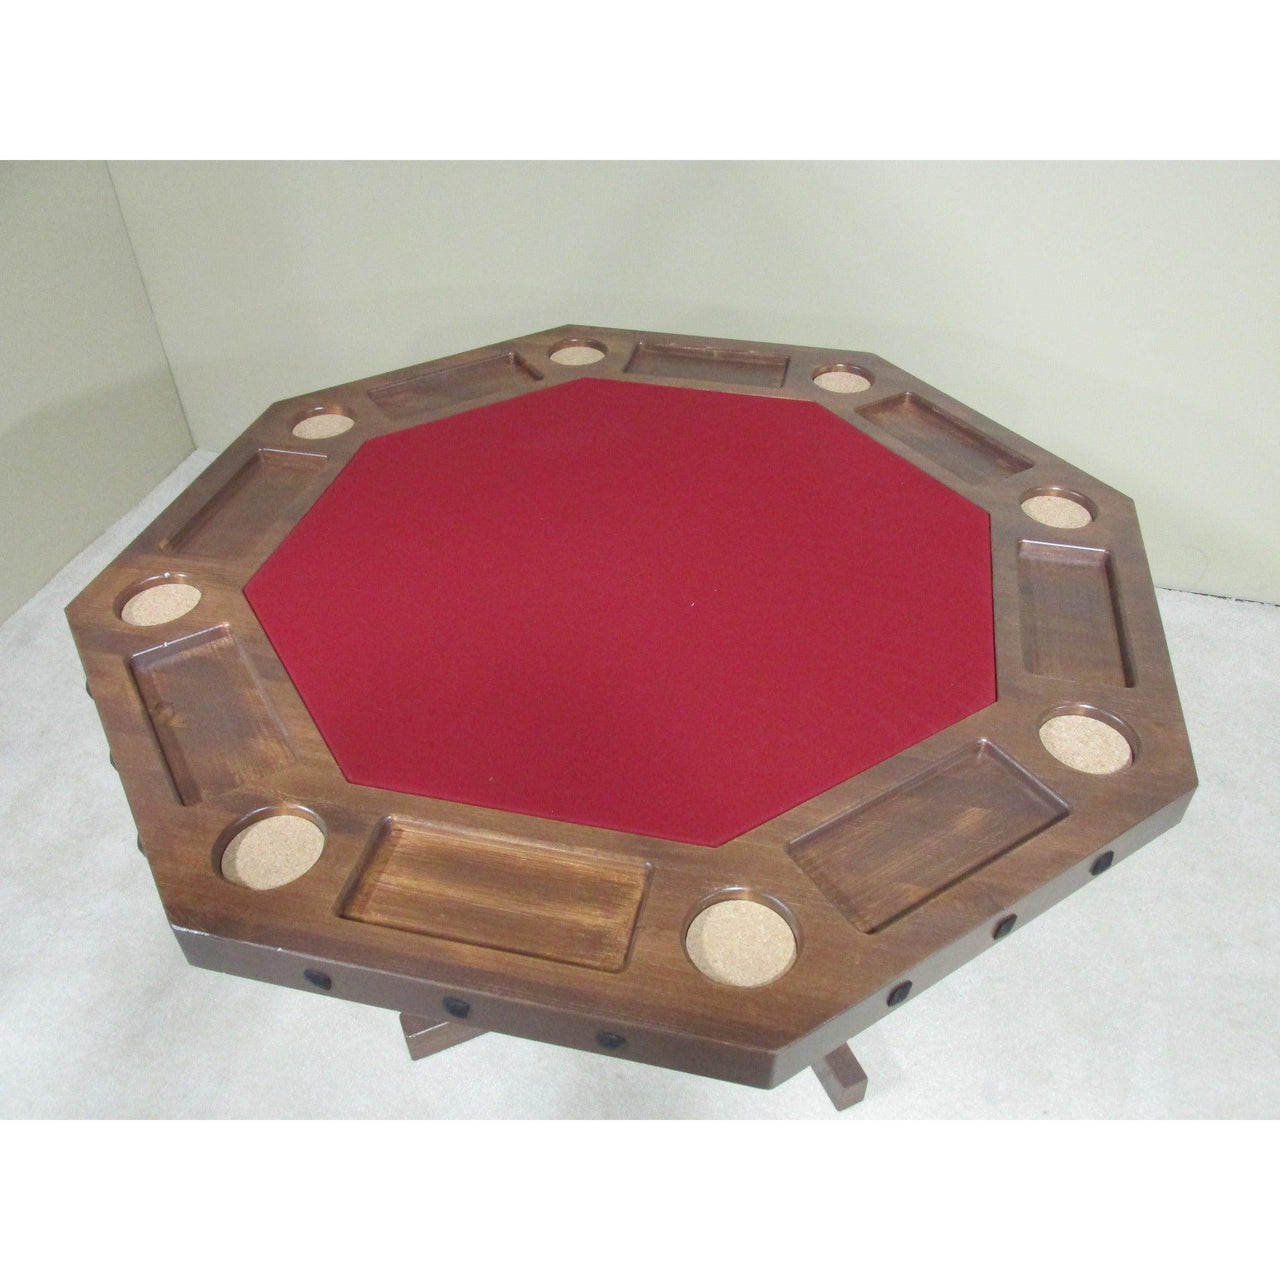 Convertible Poker & Dining Table Barnwood by Viking Log Furniture-AMERICANA-POKER-TABLES